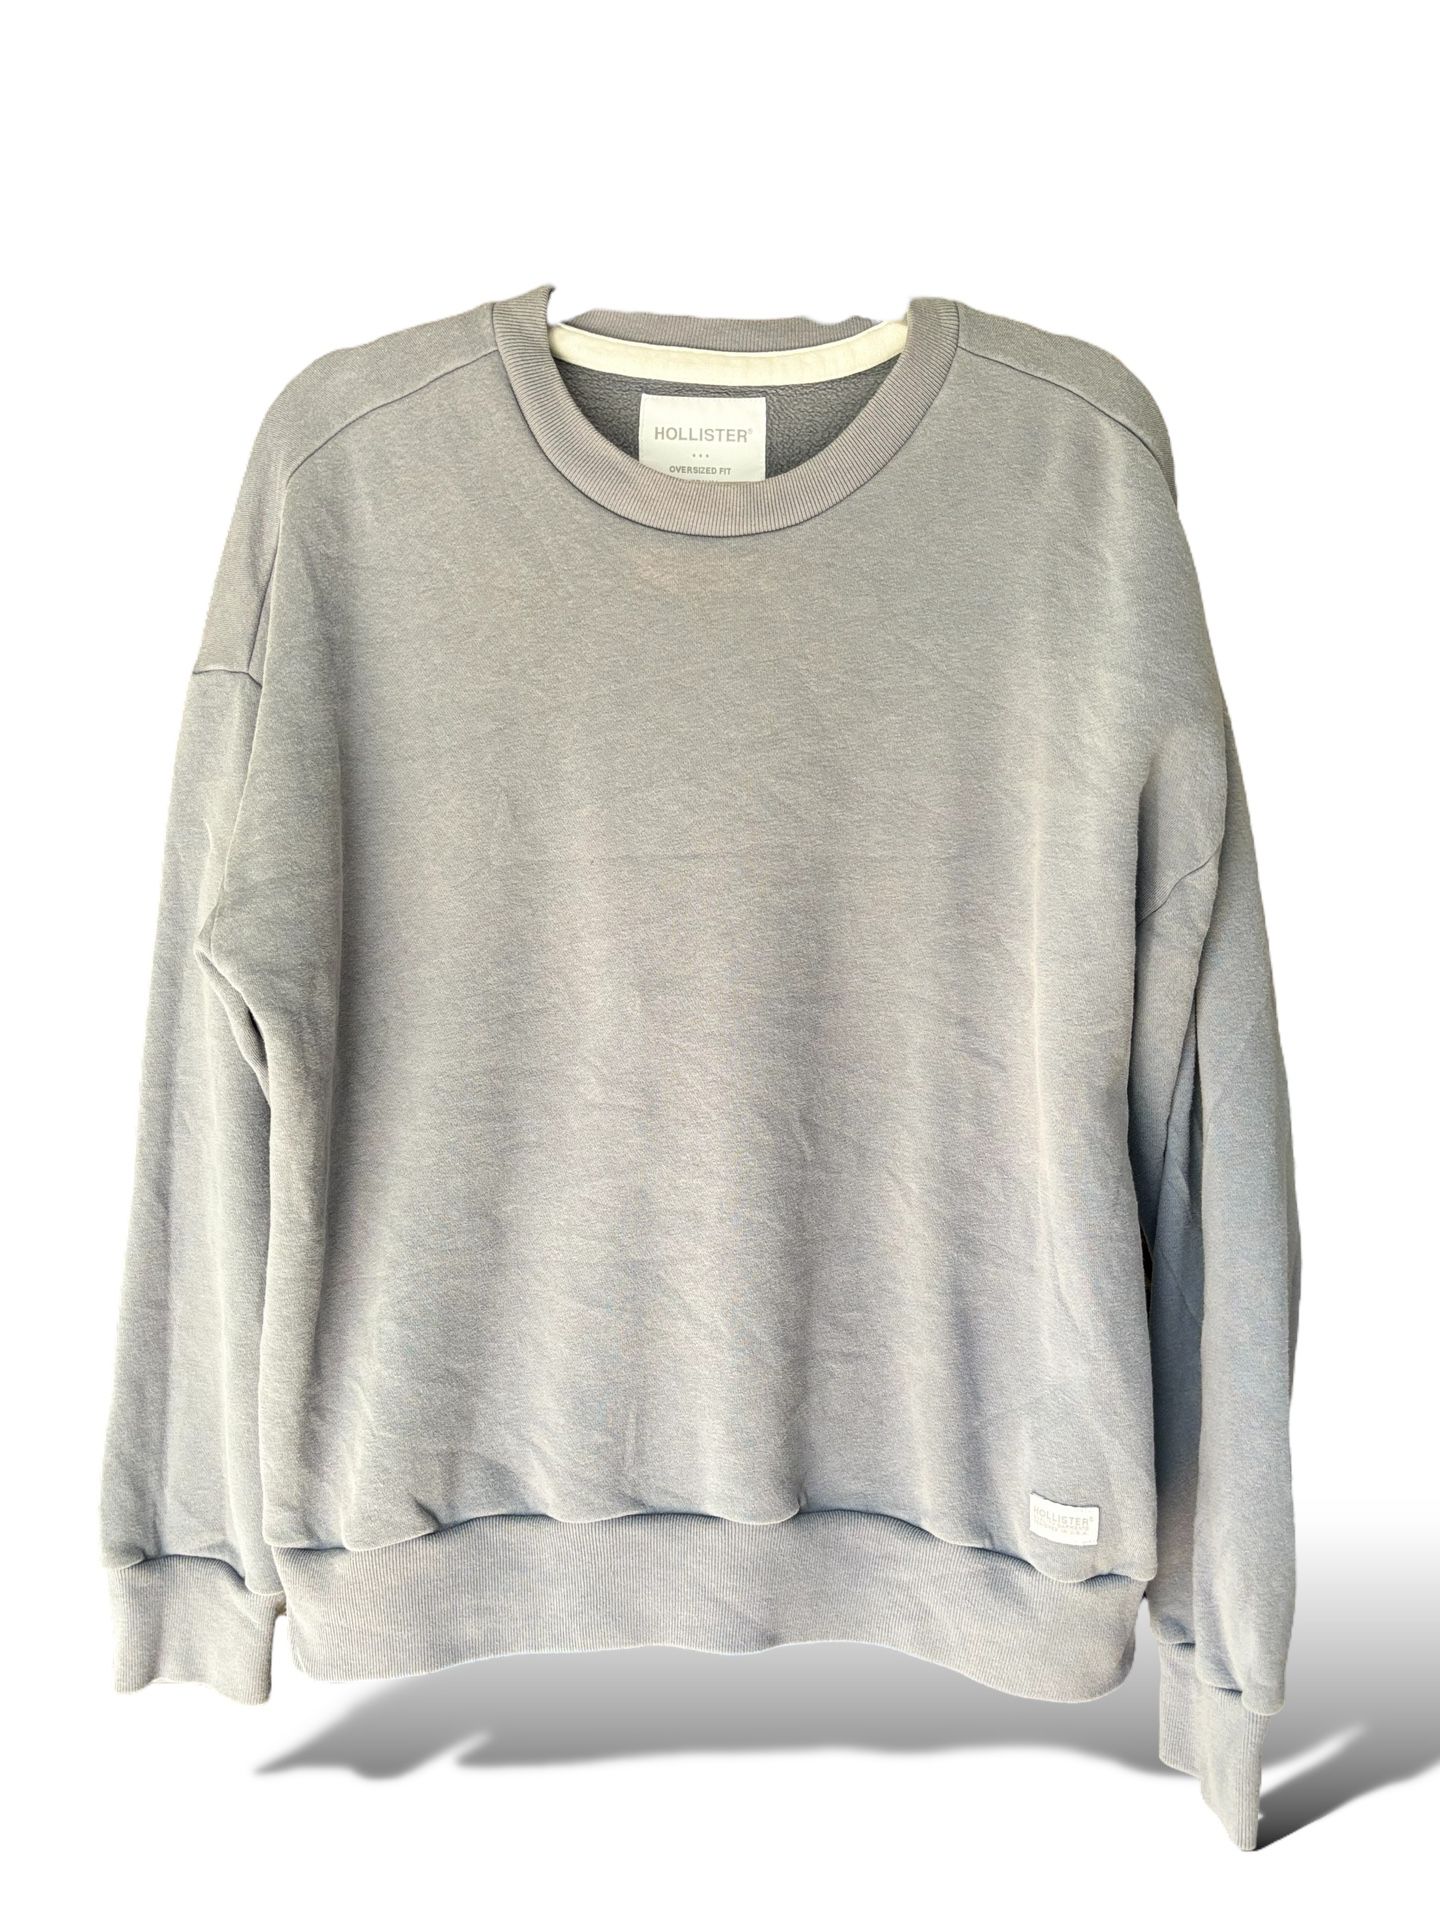 HOLLISTER Crewneck Sweatshirt Pullover Grey Women’s Oversized Fit Size Medium